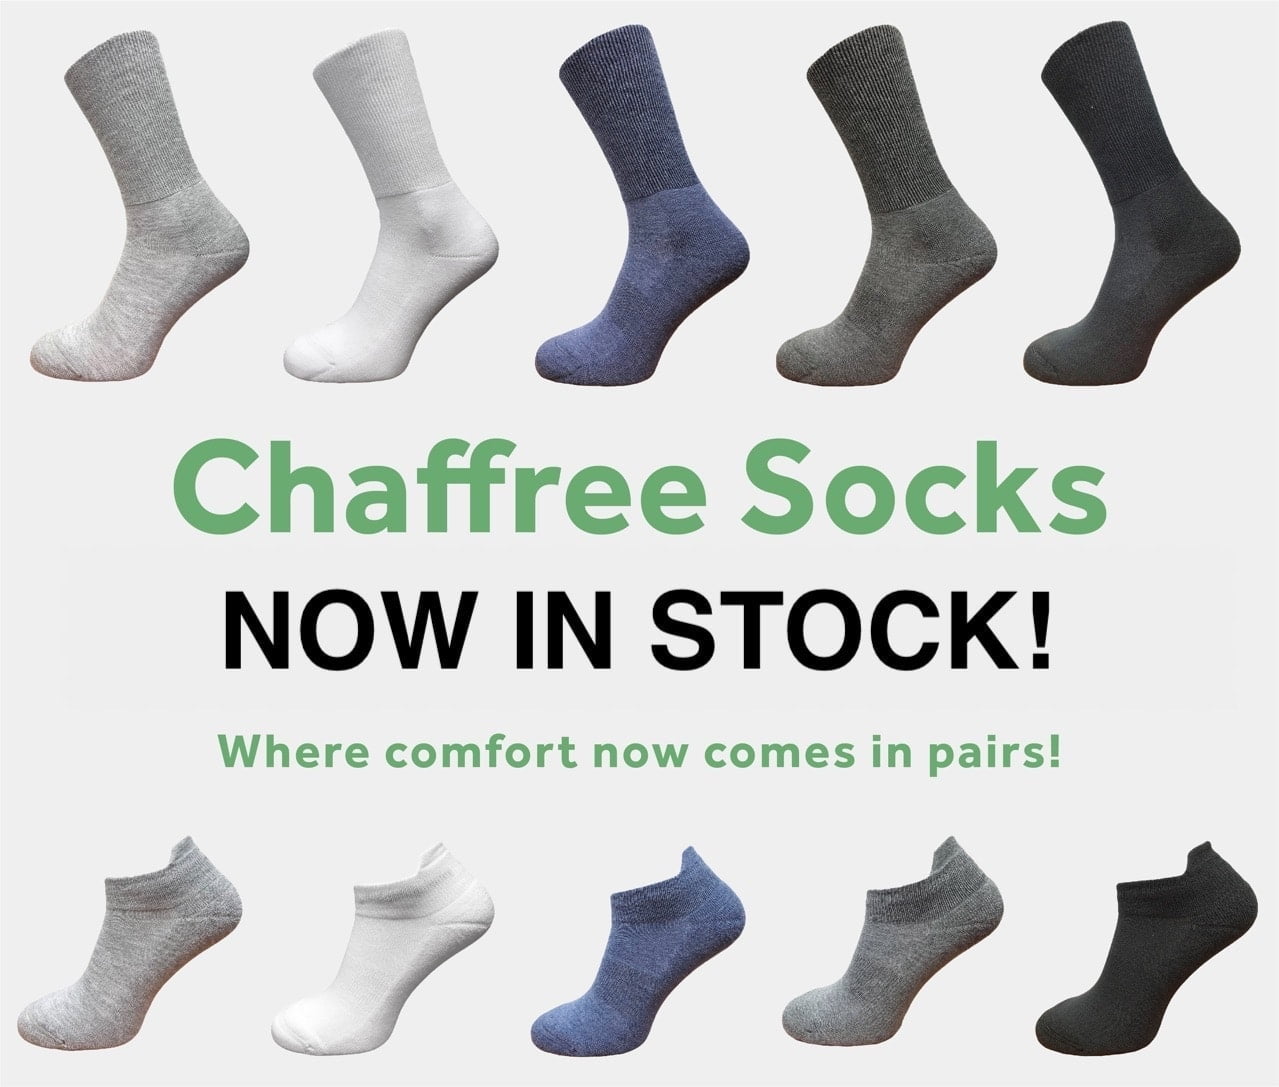 chaffree socks now in stock » Chaffree